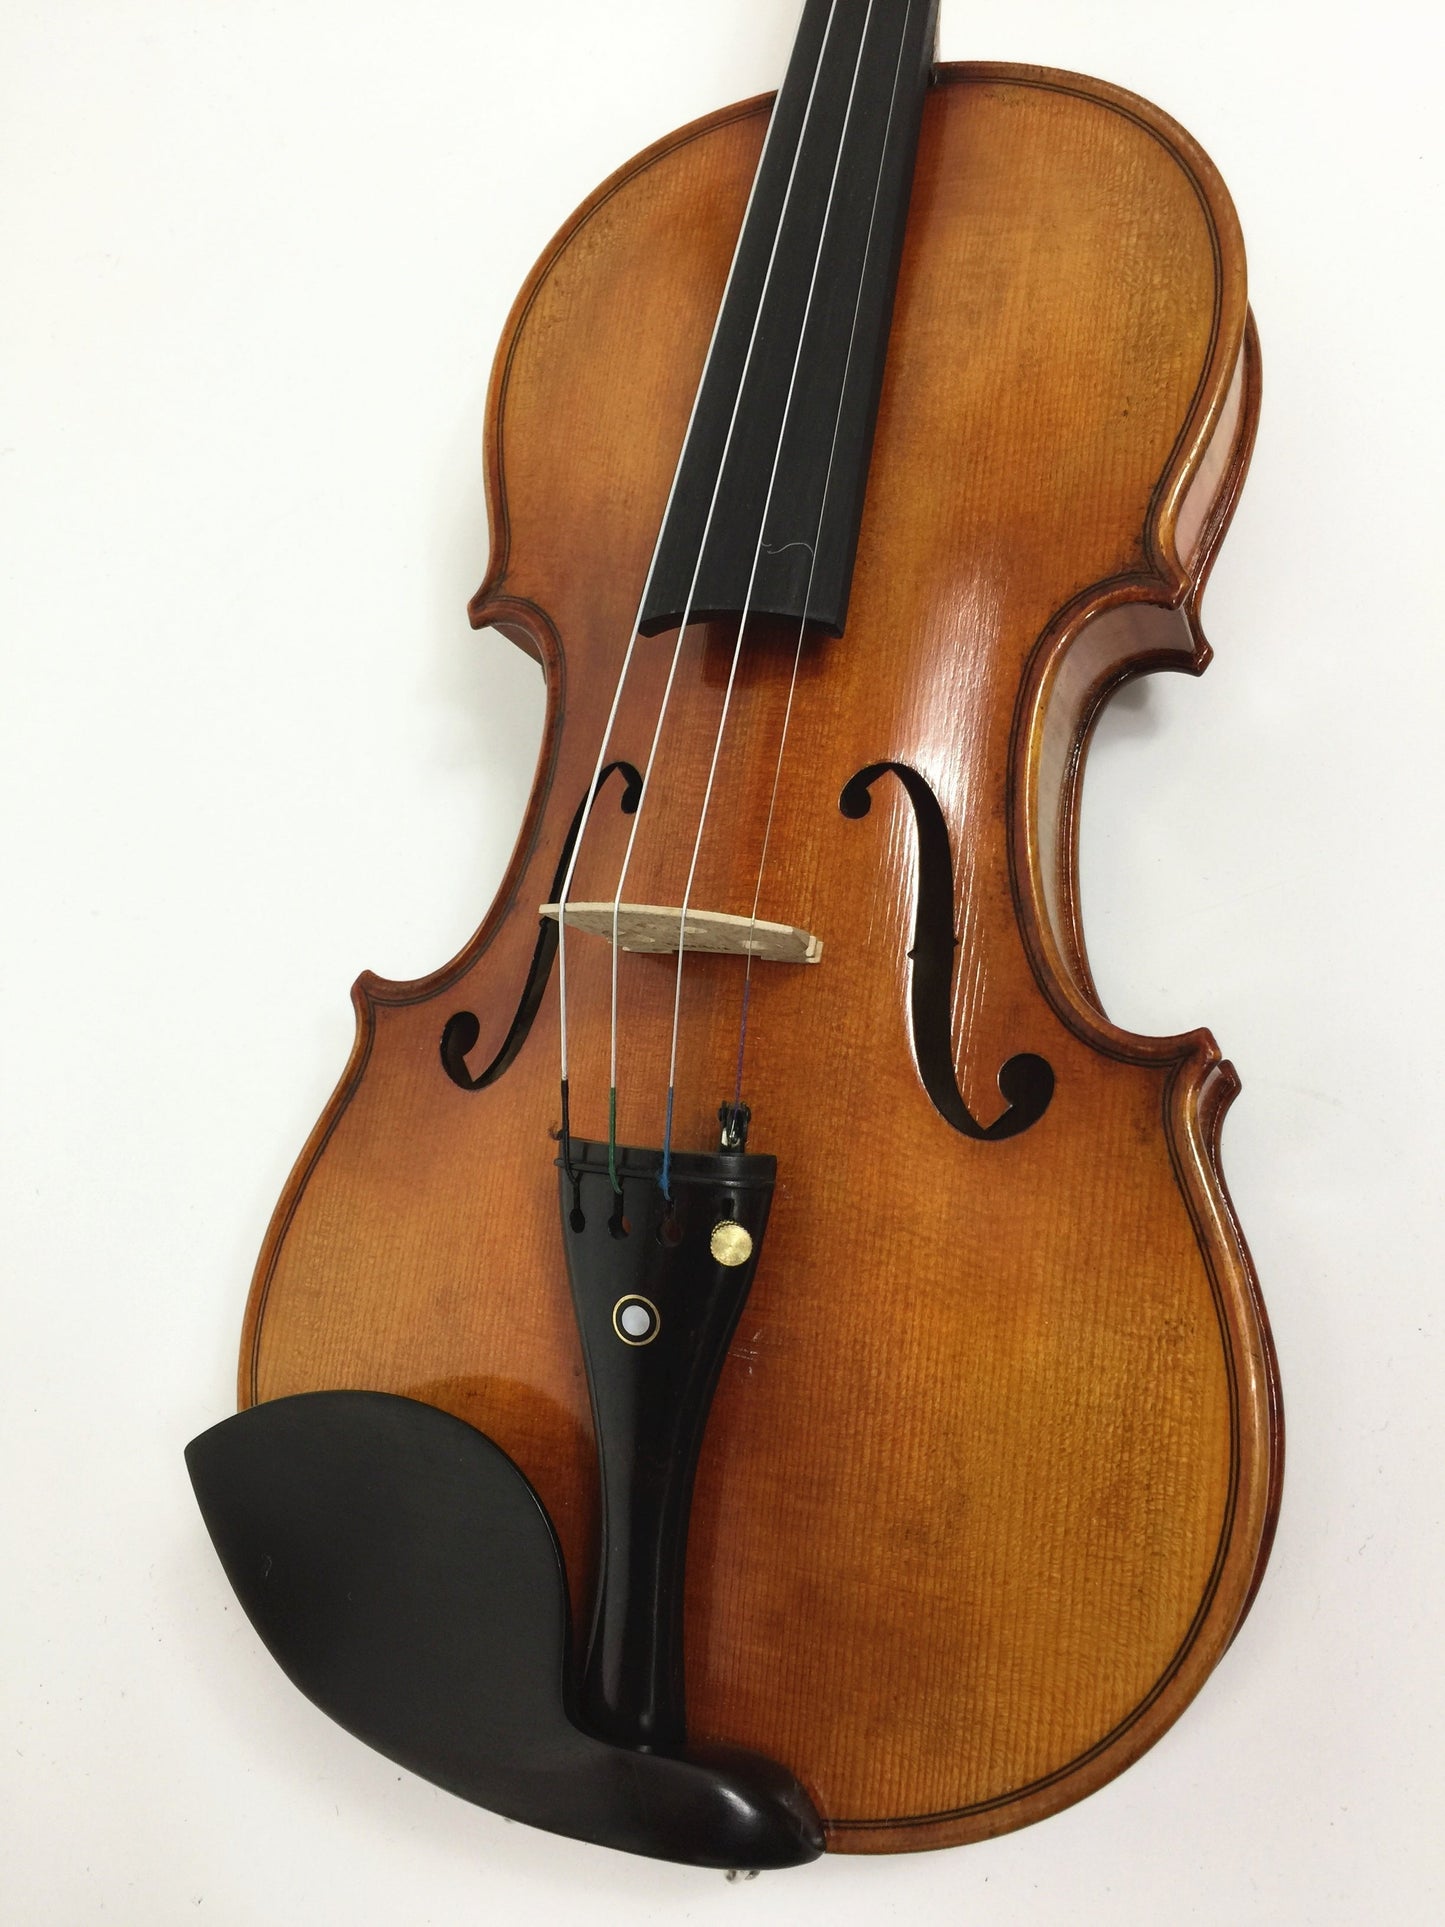 Symphony SJV888 4/4 One-Piece Back Solid Wood Handmade Violin Outfit, Ebony Fittings